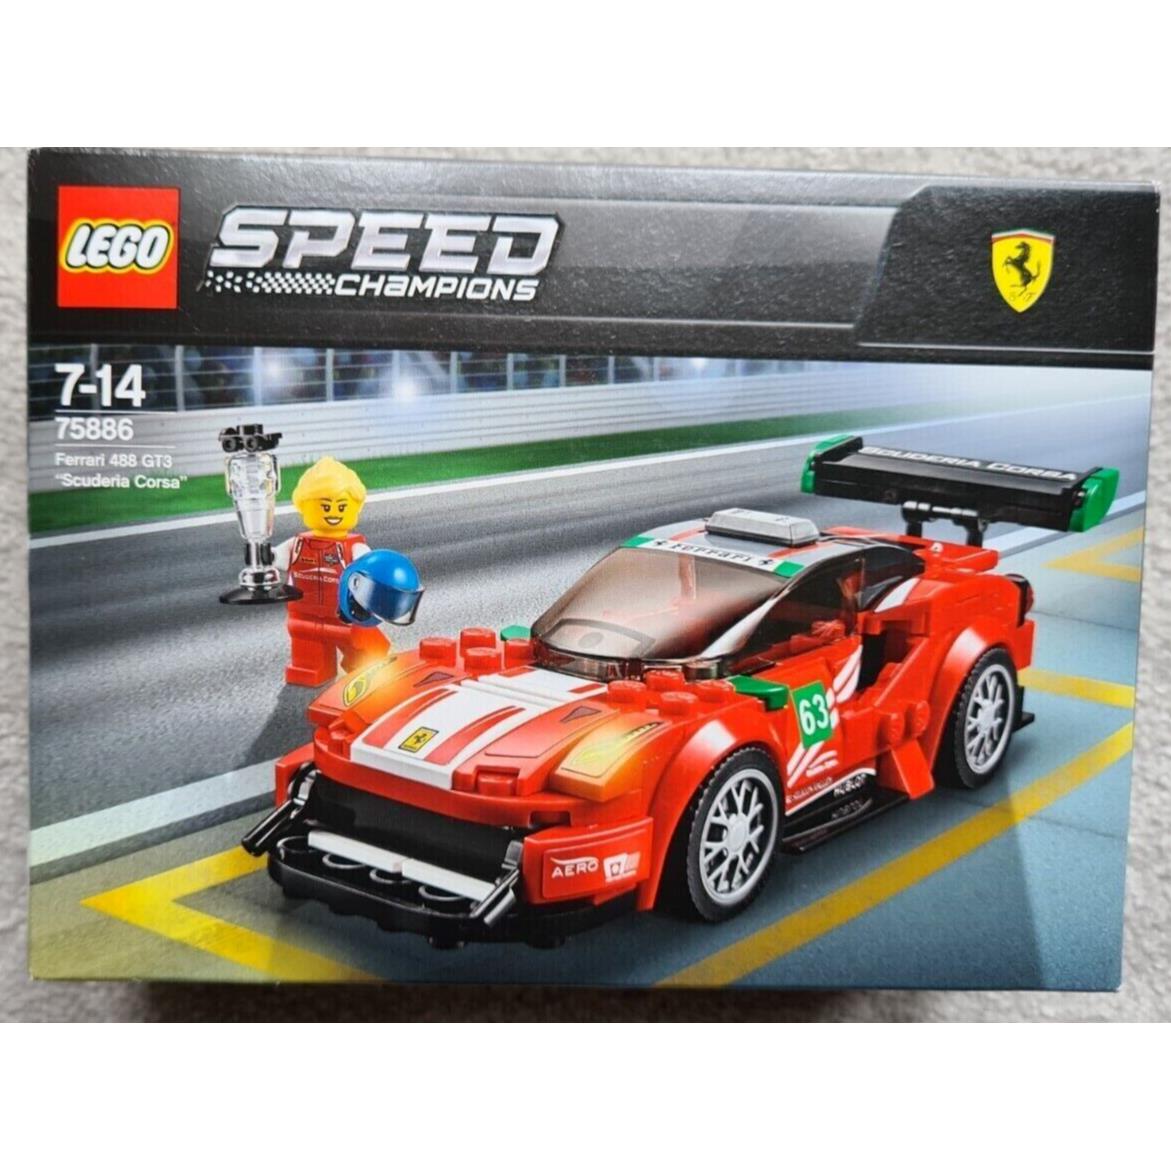 Lego Speed Champions Ferrari 488 GT3 Scuderia Corsa 2018 75886 Set 179 Pcs